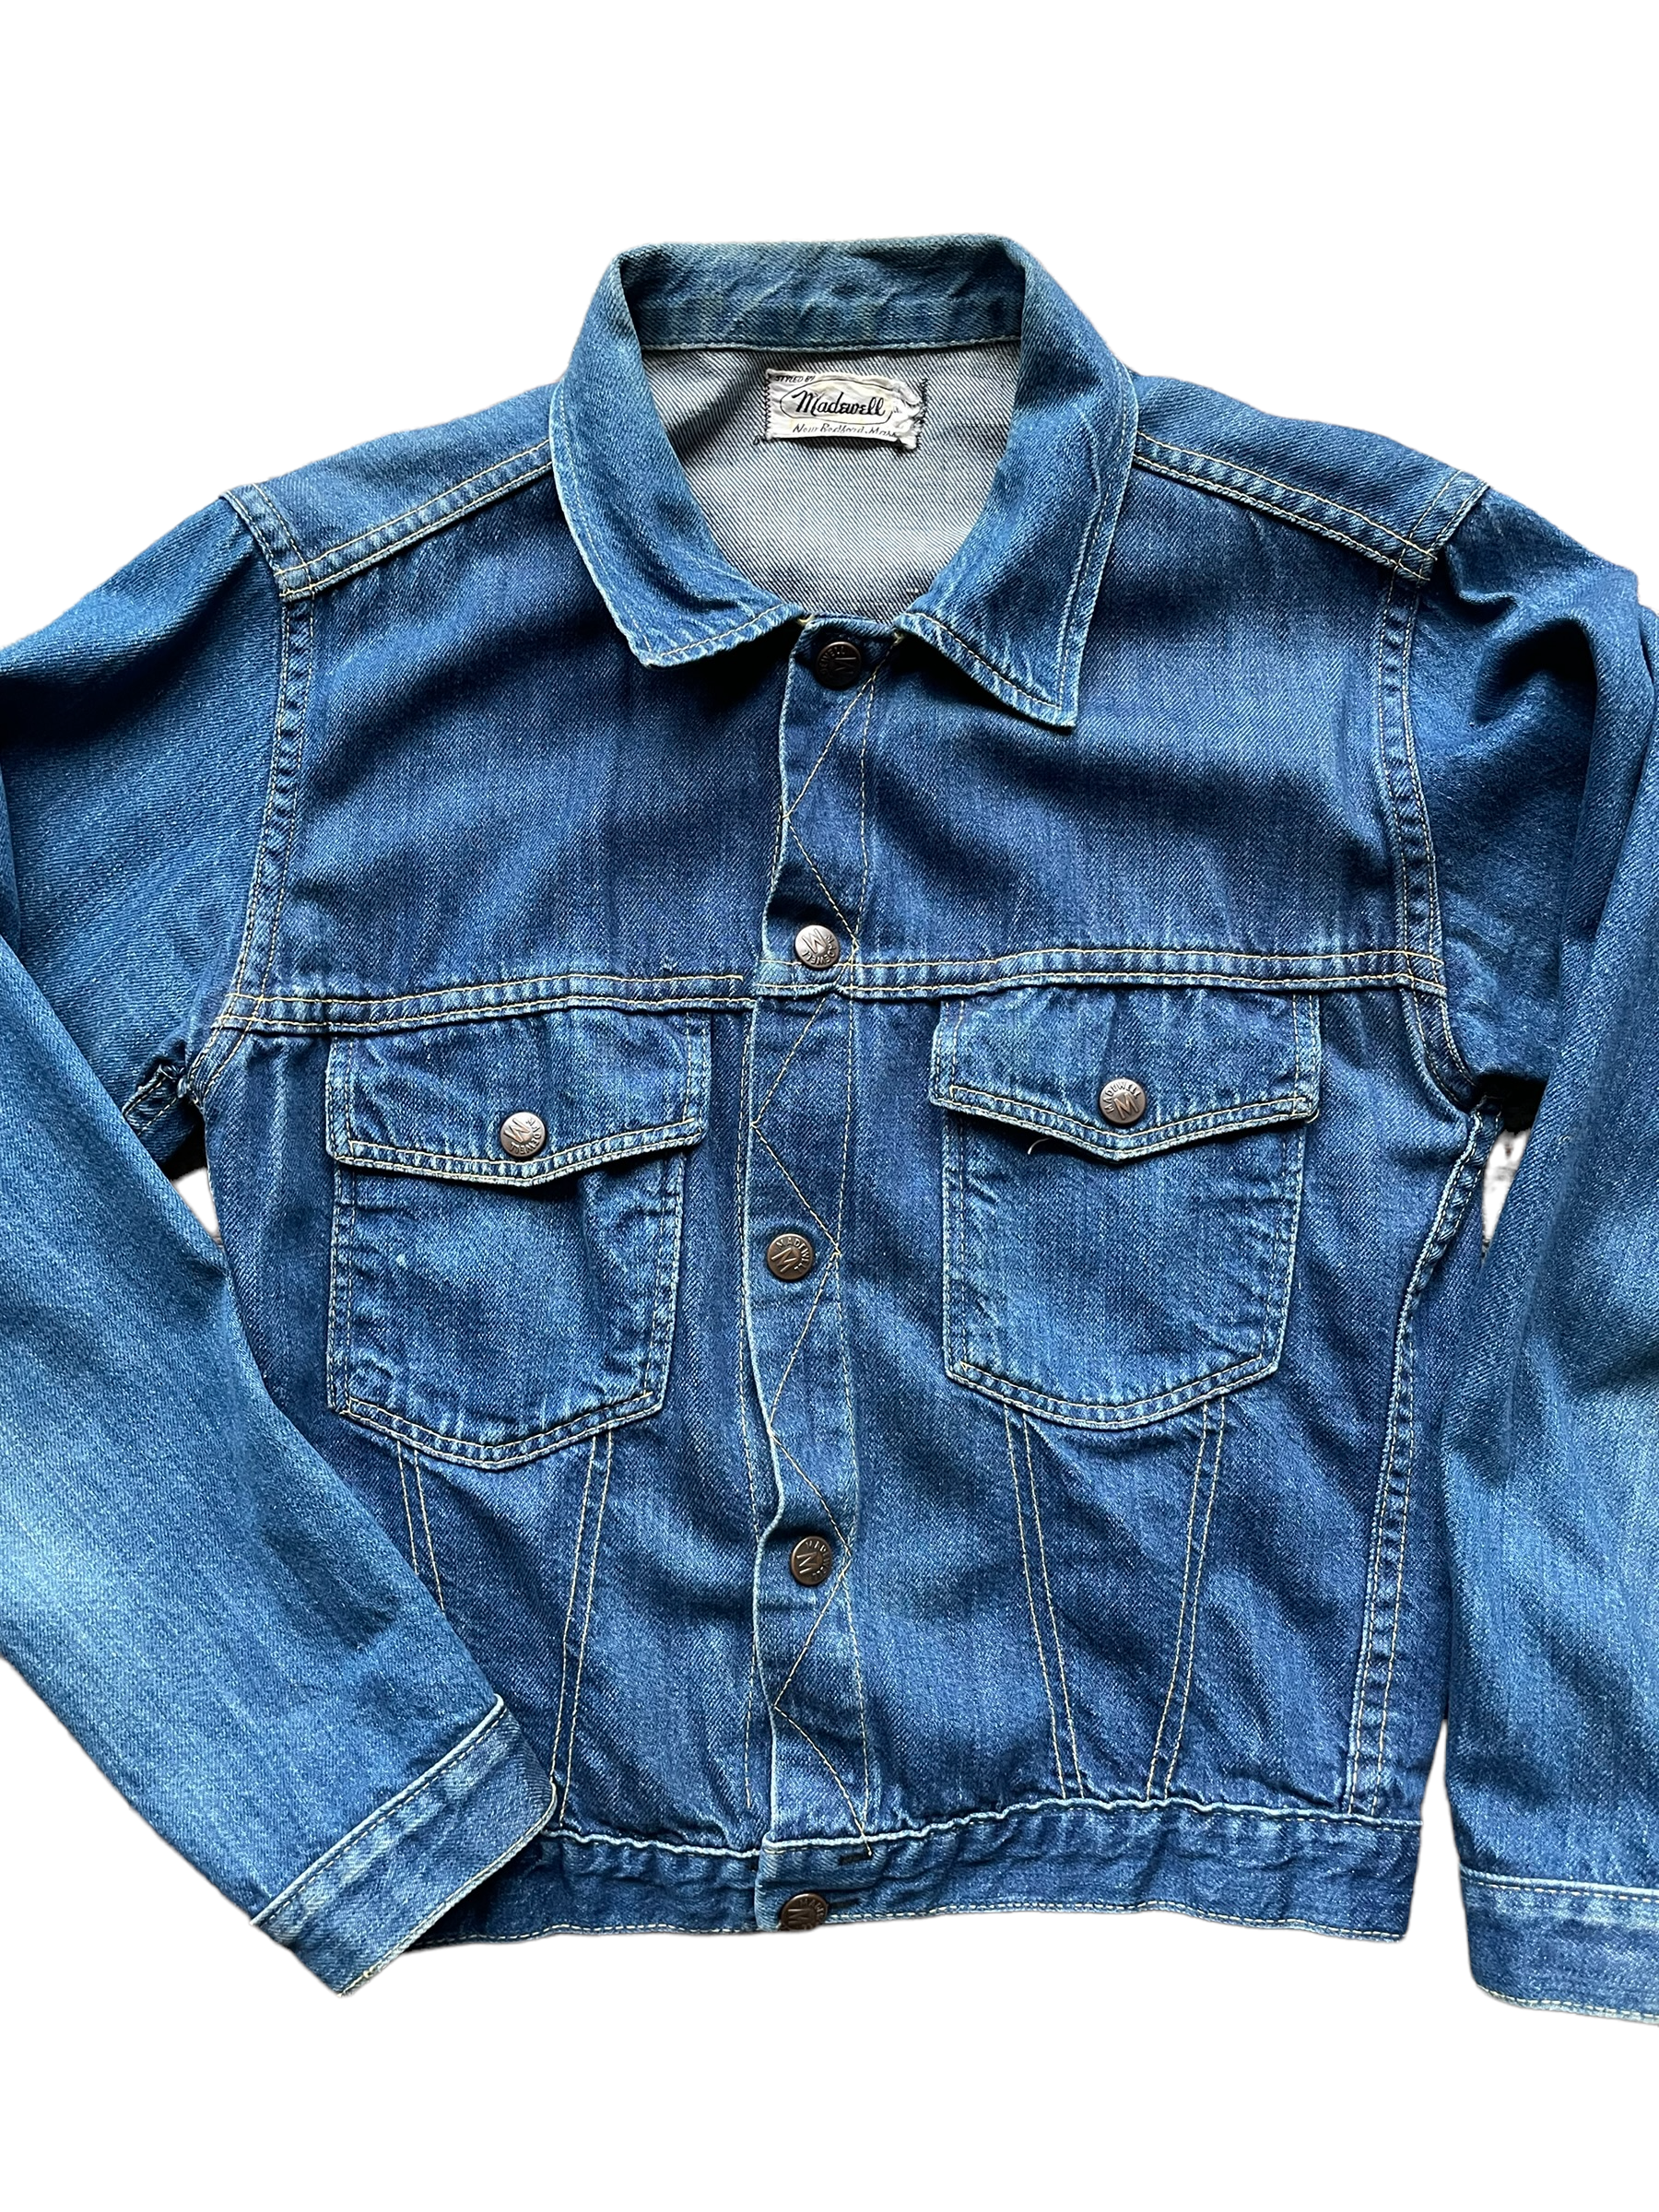 Front Cropped View of Vintage Madewell Selvedge Denim Jacket | Barn Owl Vintage | Seattle Vintage Workwear Clothing